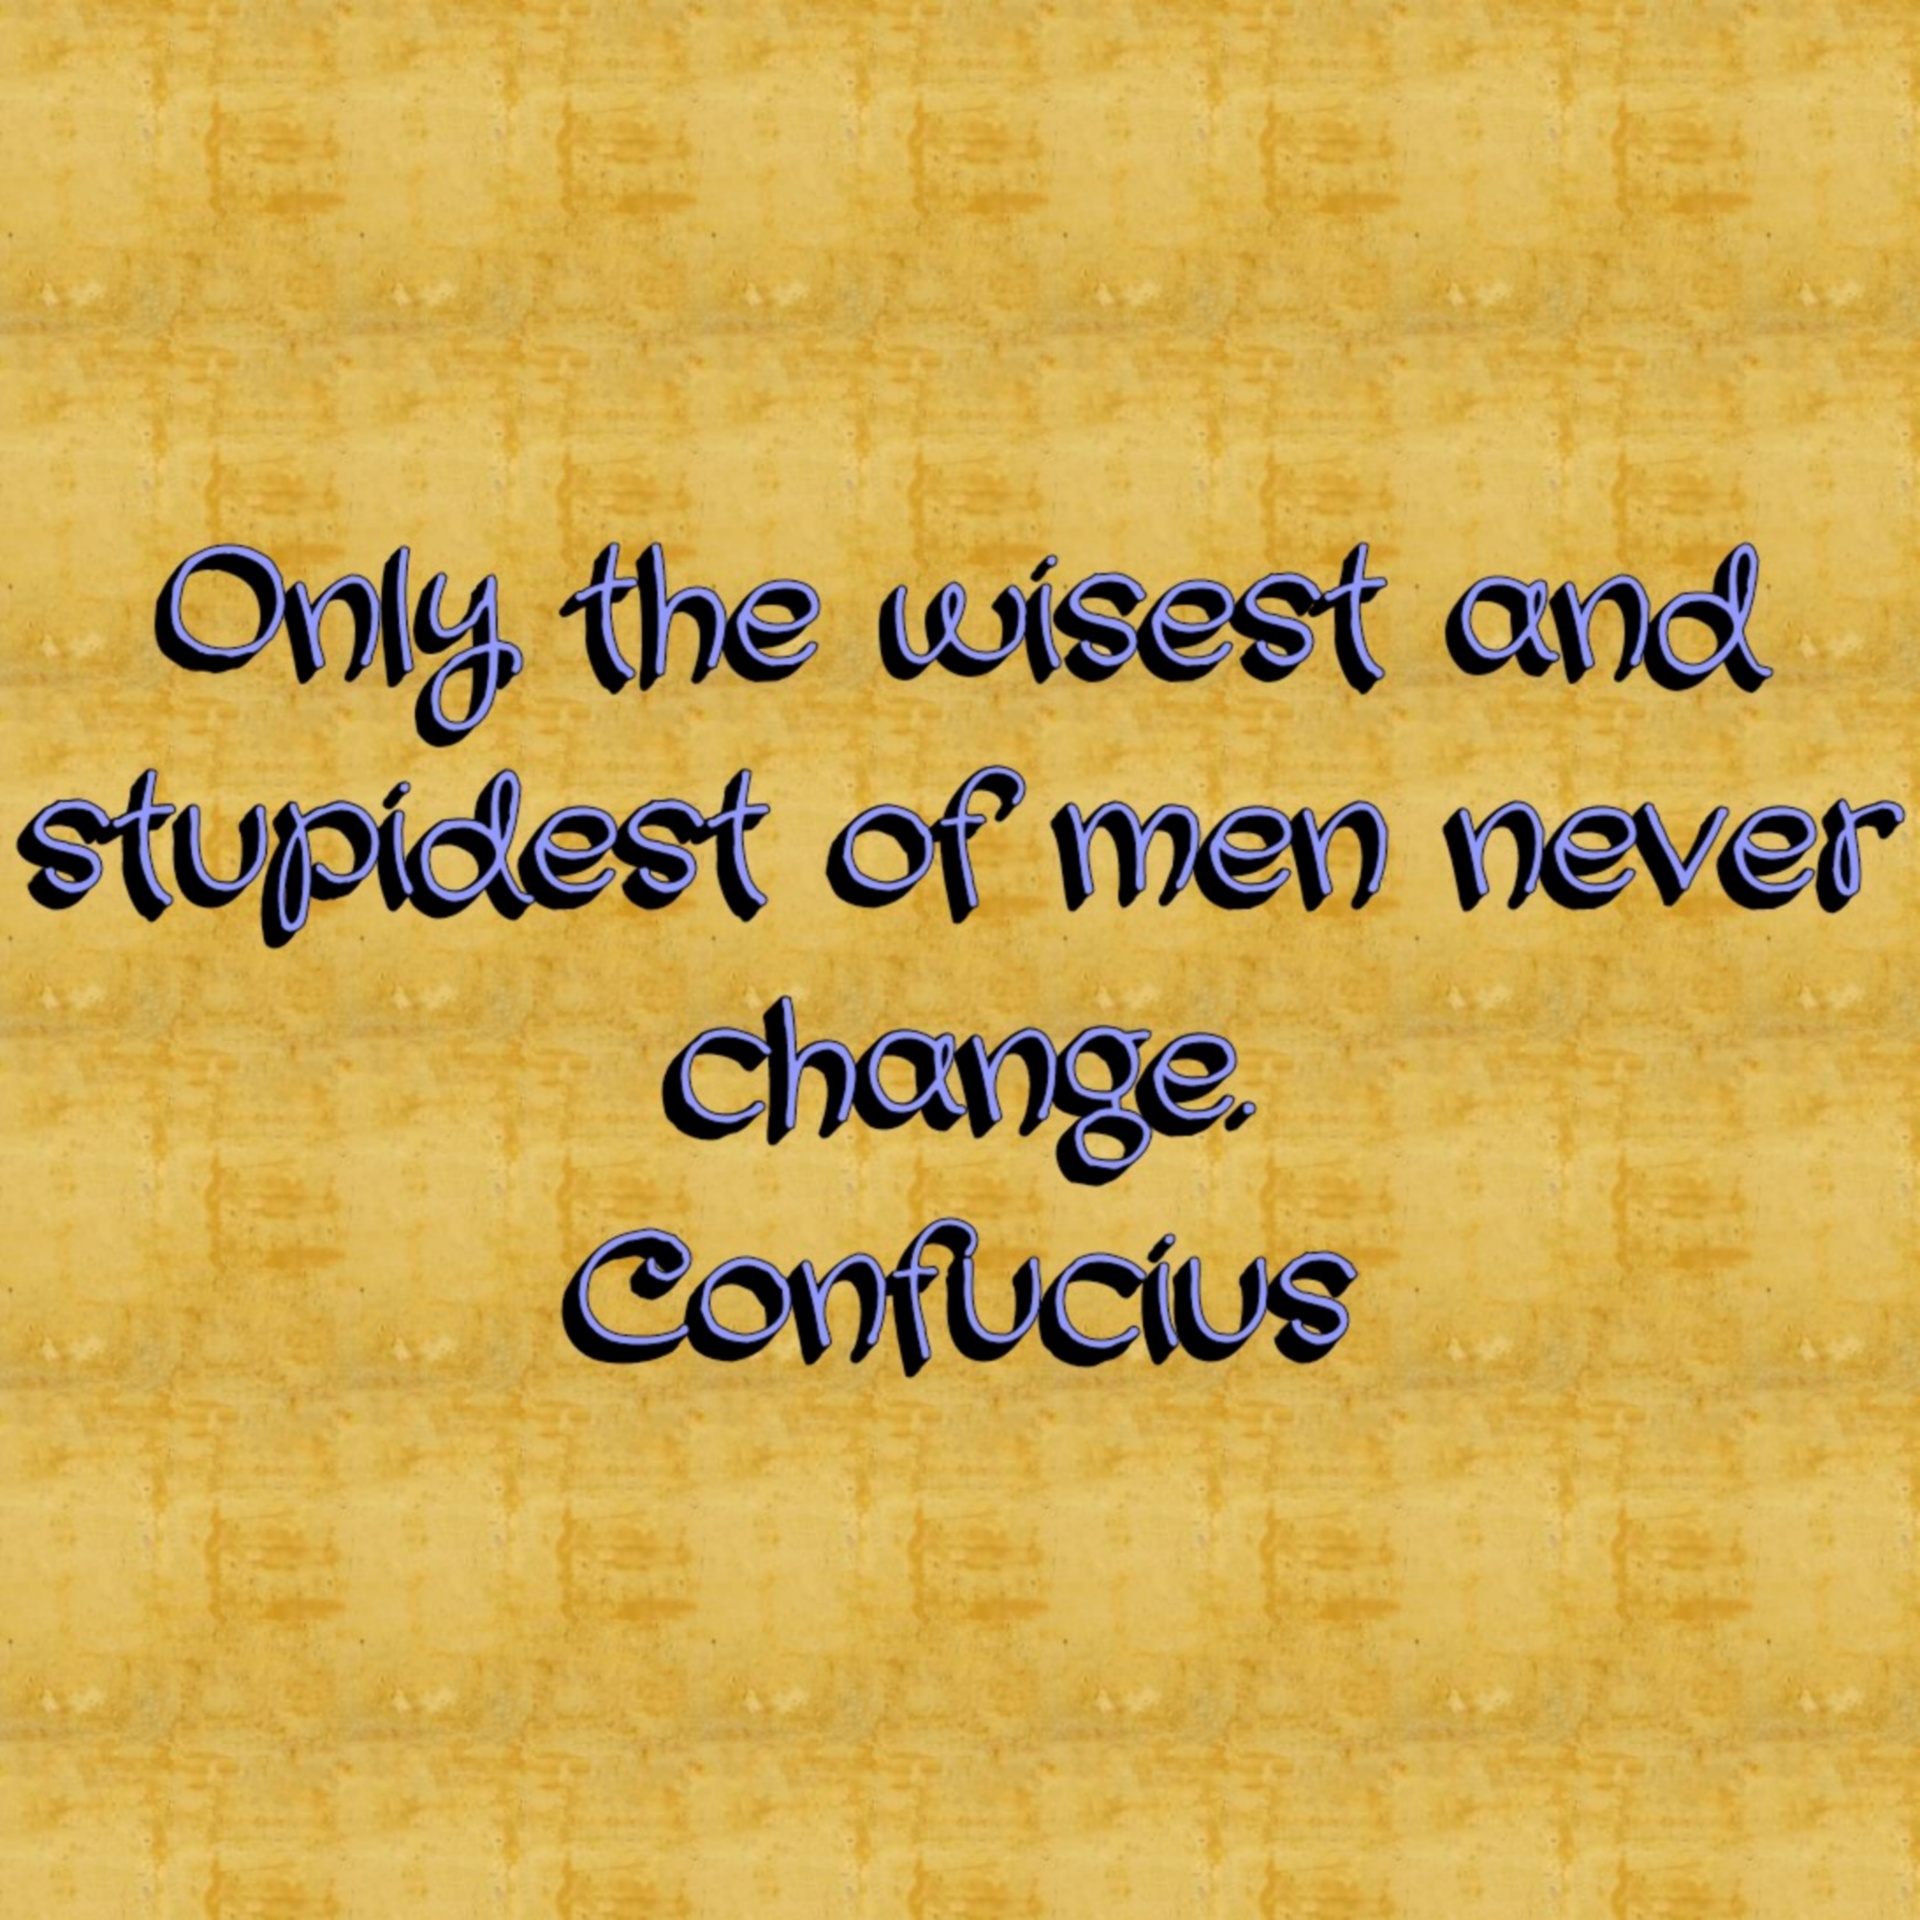 Confucius citaat over verandering